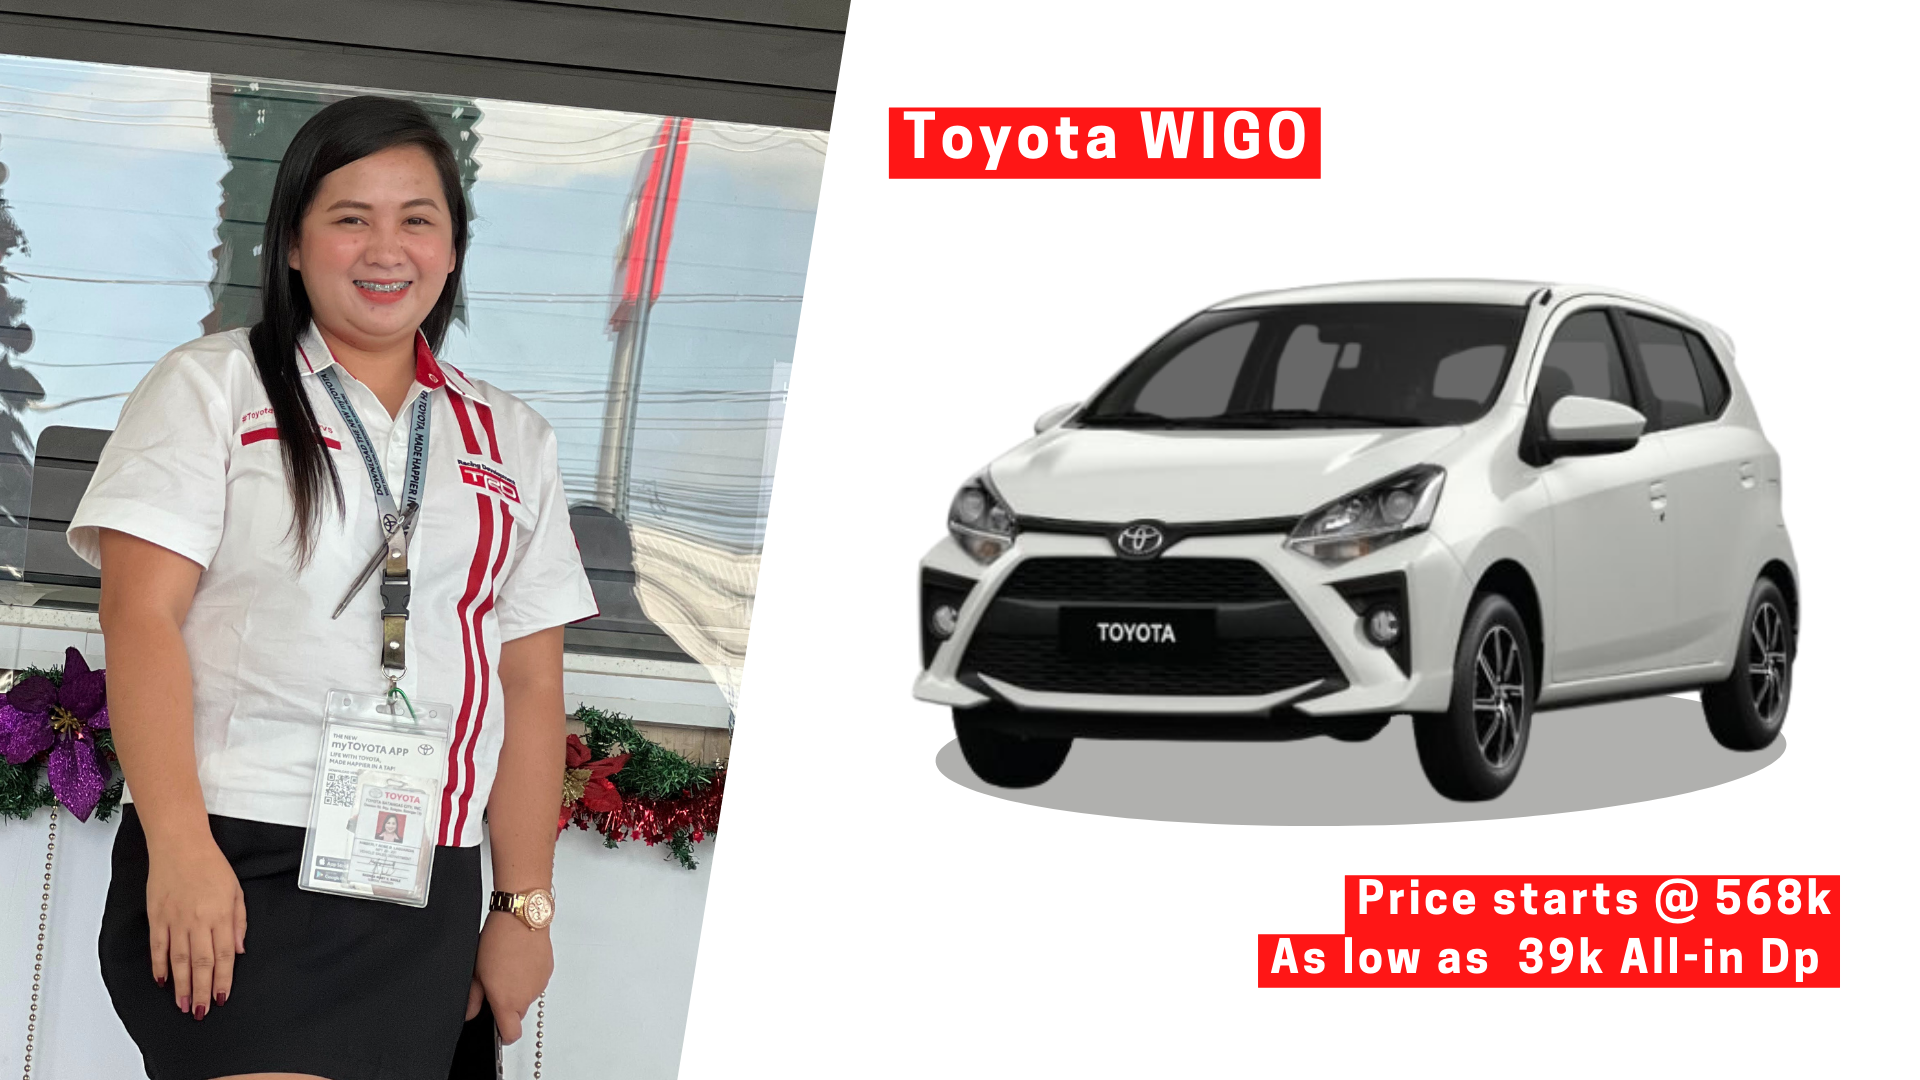 Toyota WIGO Promos by Kimberly Laguardia